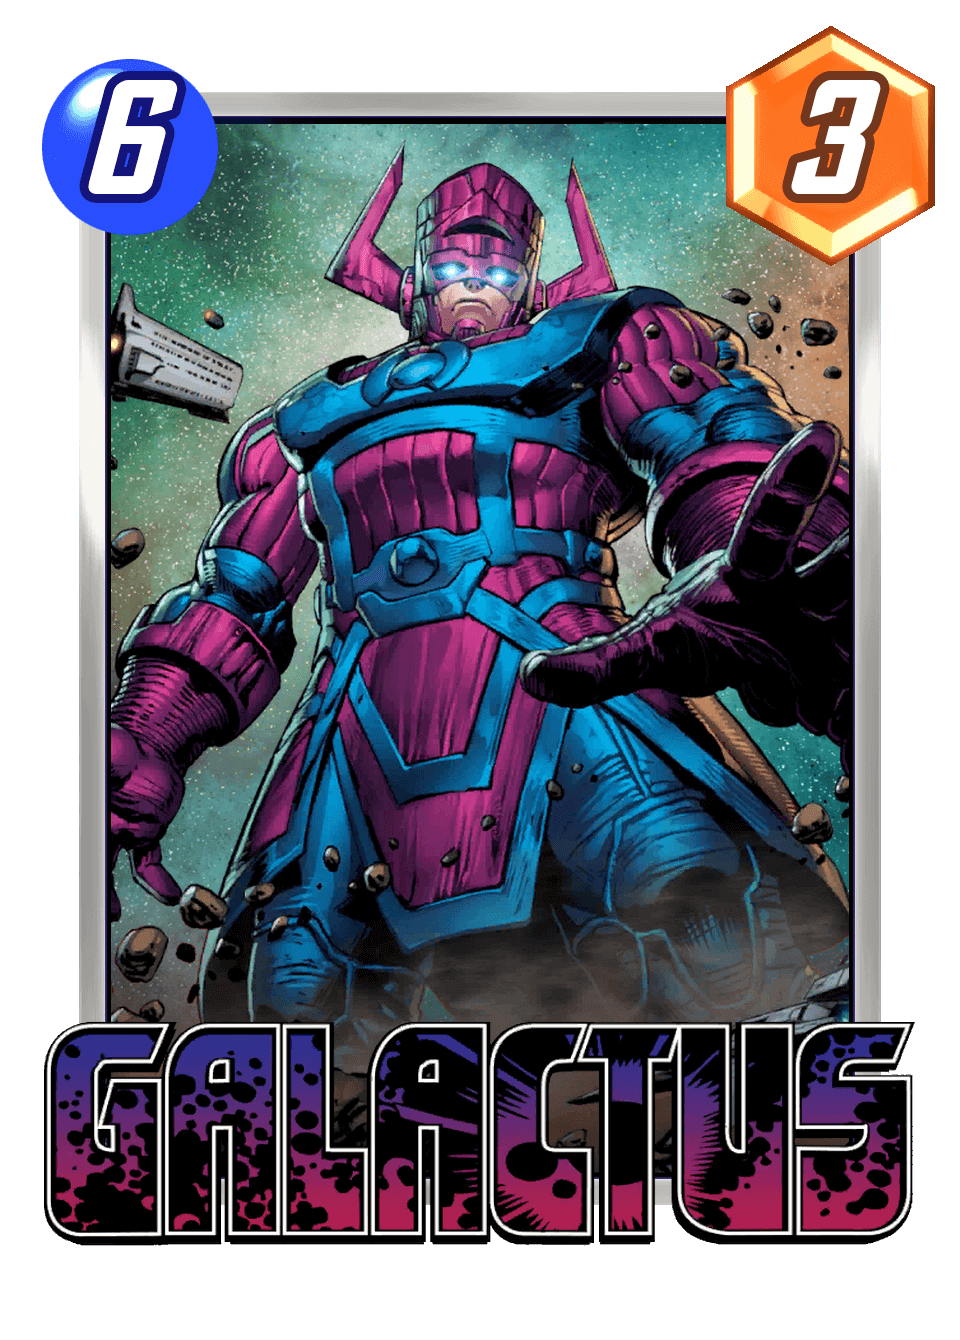 Alioth + Galactus = Toxic